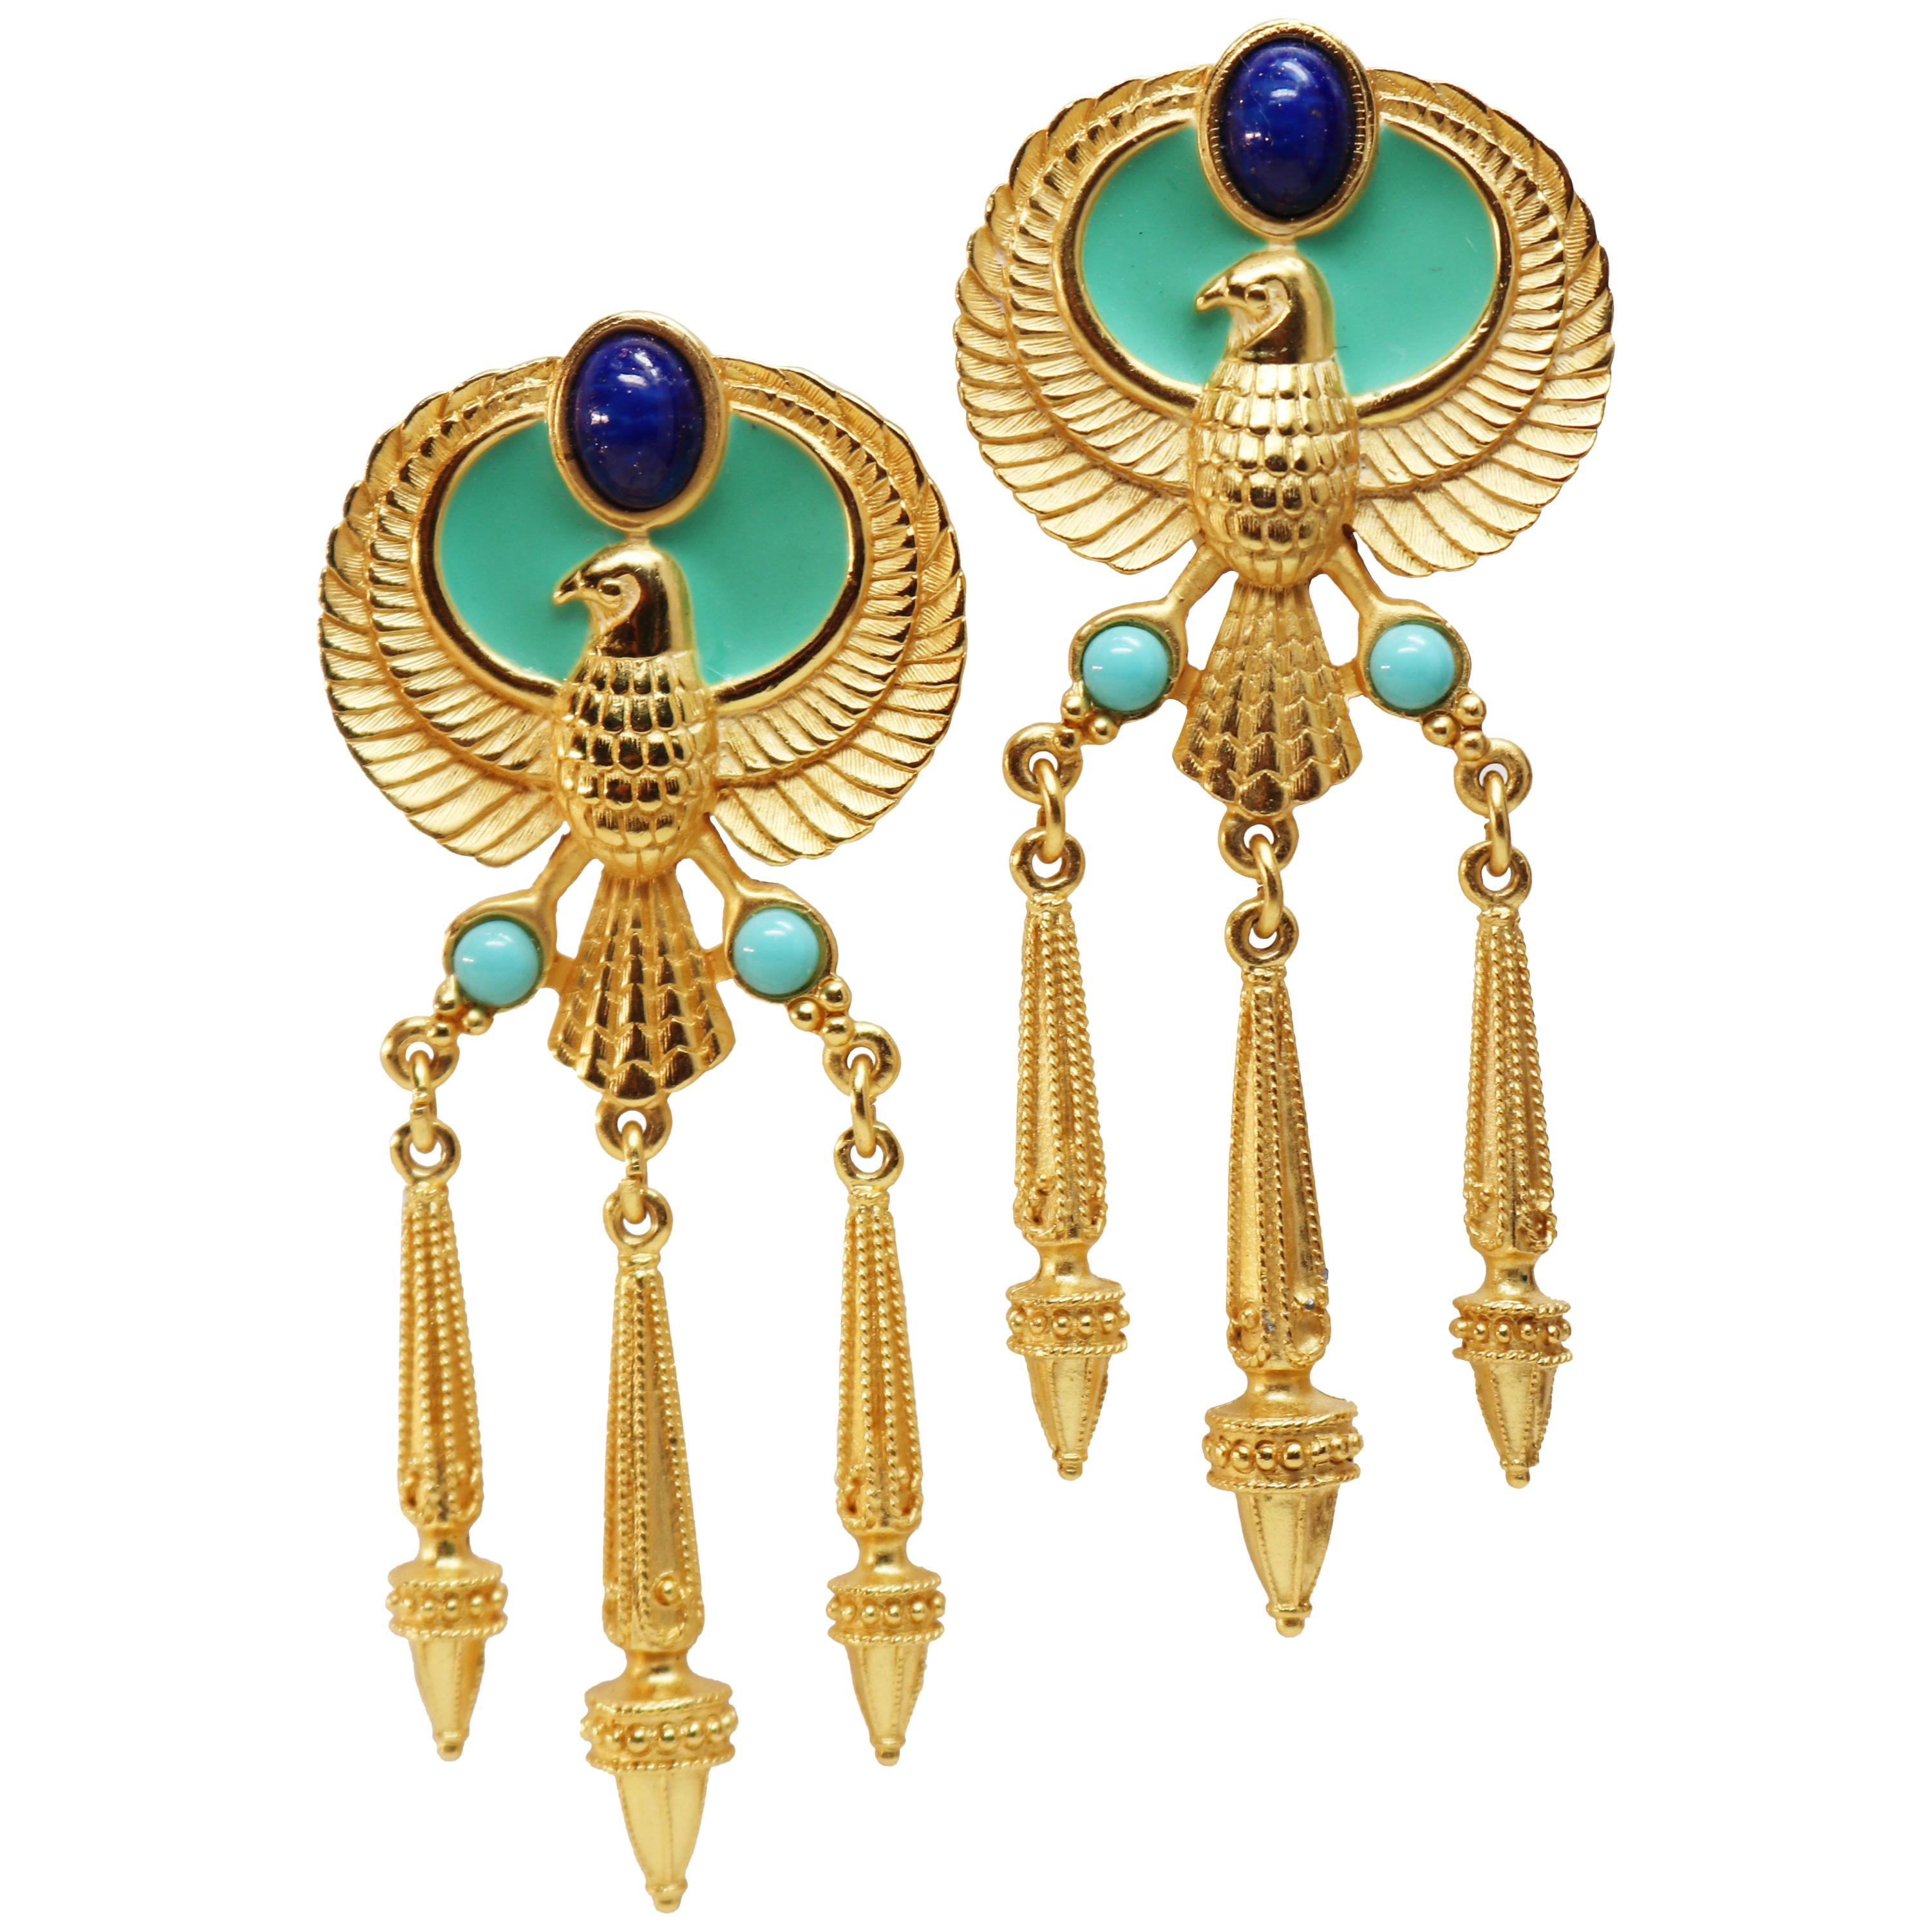 Elizabeth Taylor "Egyptian Revival" Earrings For Sale